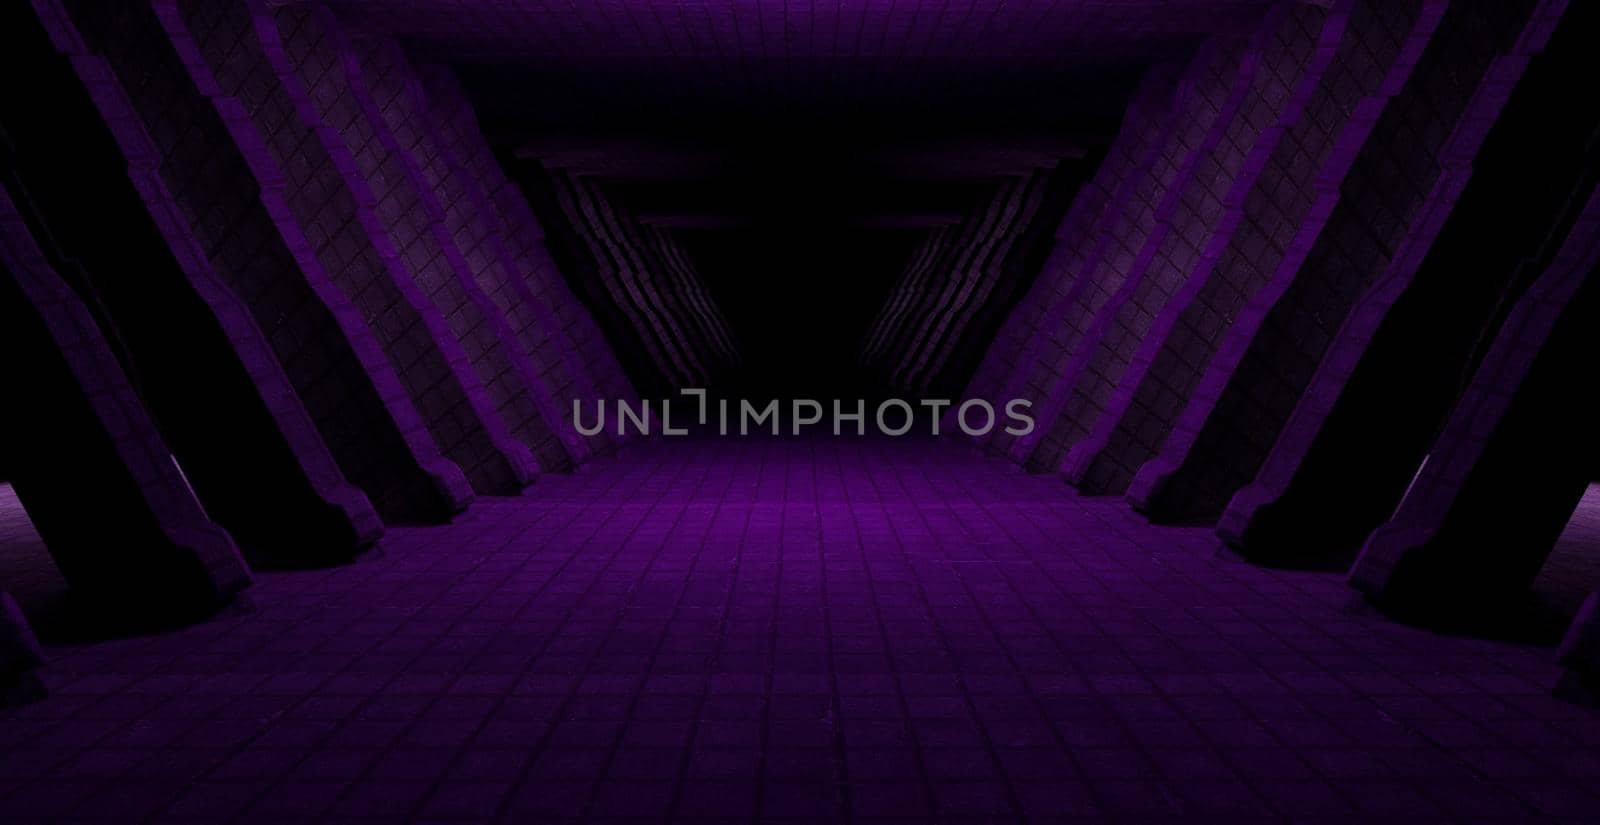 Empty Futuristic Reflective Studio Room Dark Black Background Space Age Concept 3D Illustration by yay_lmrb